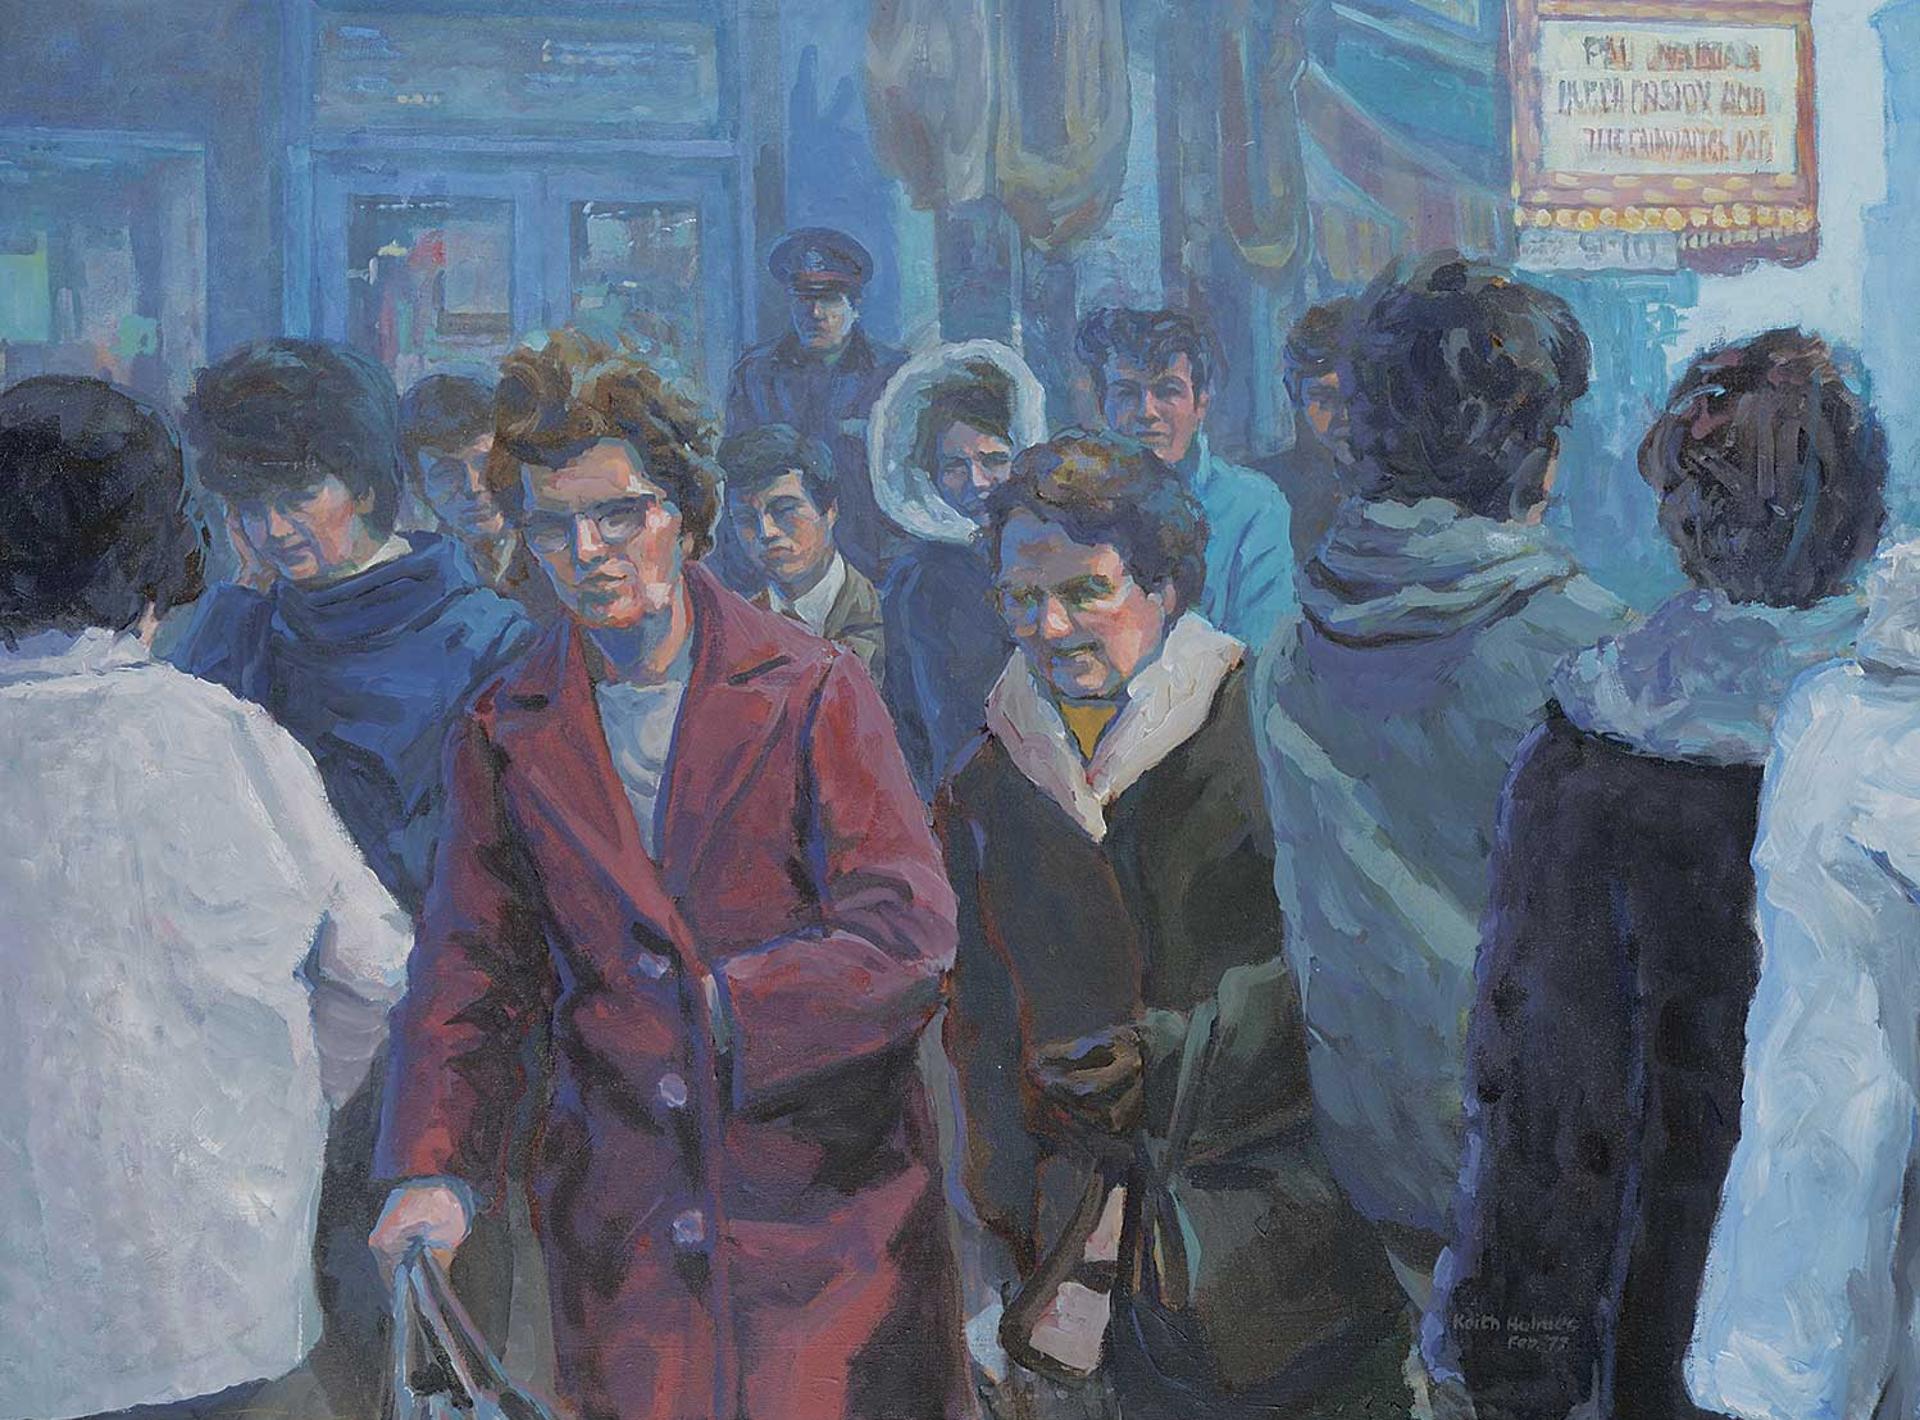 Keith Holmes (1946) - Calgary Crosswalk in Blue